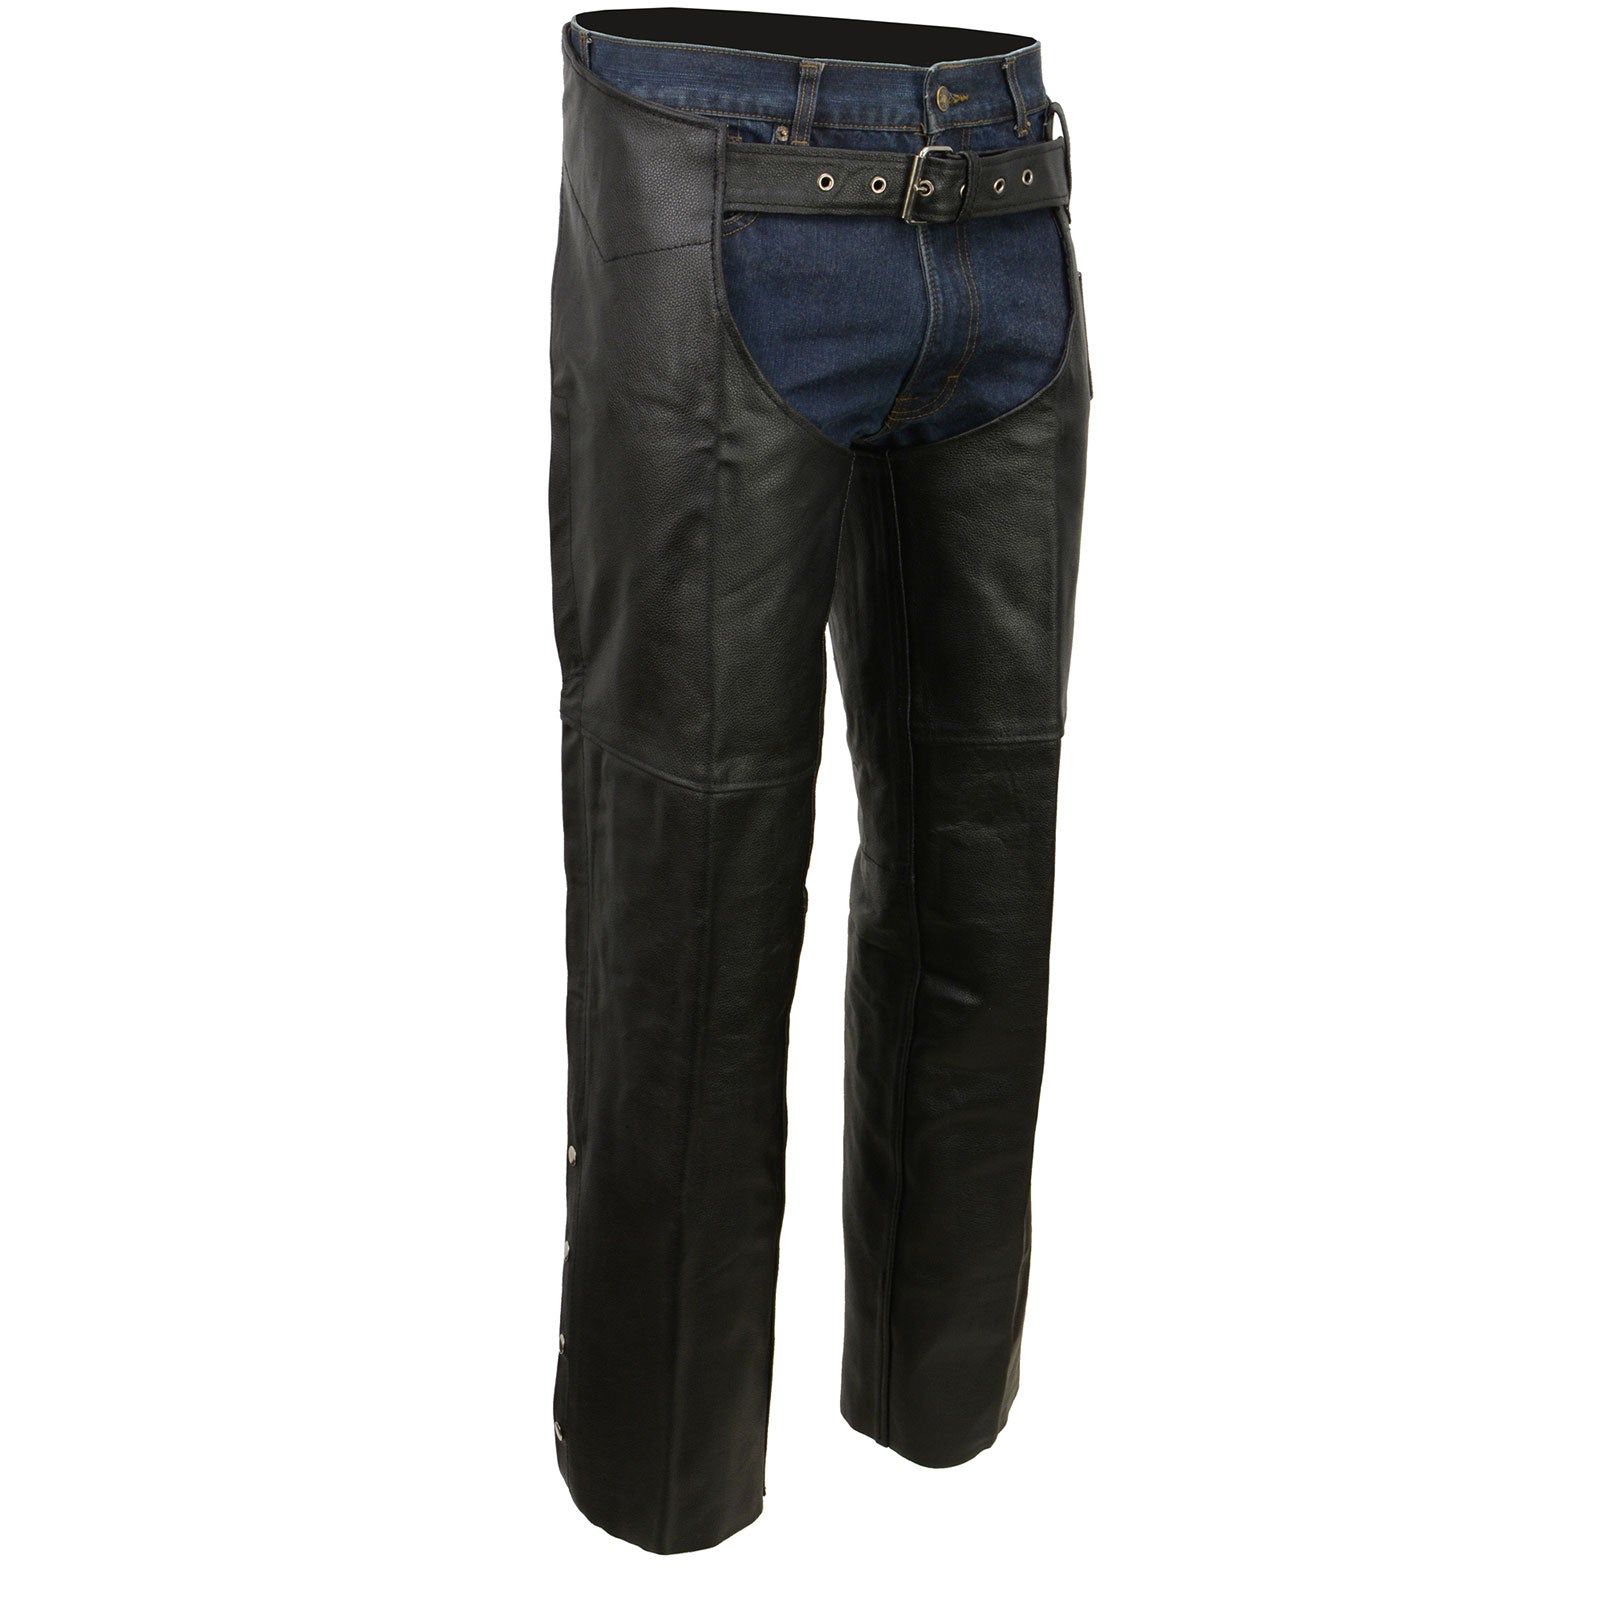 Mens Black Premium Cowhide Jeans Style Biker Motorcycle Leather